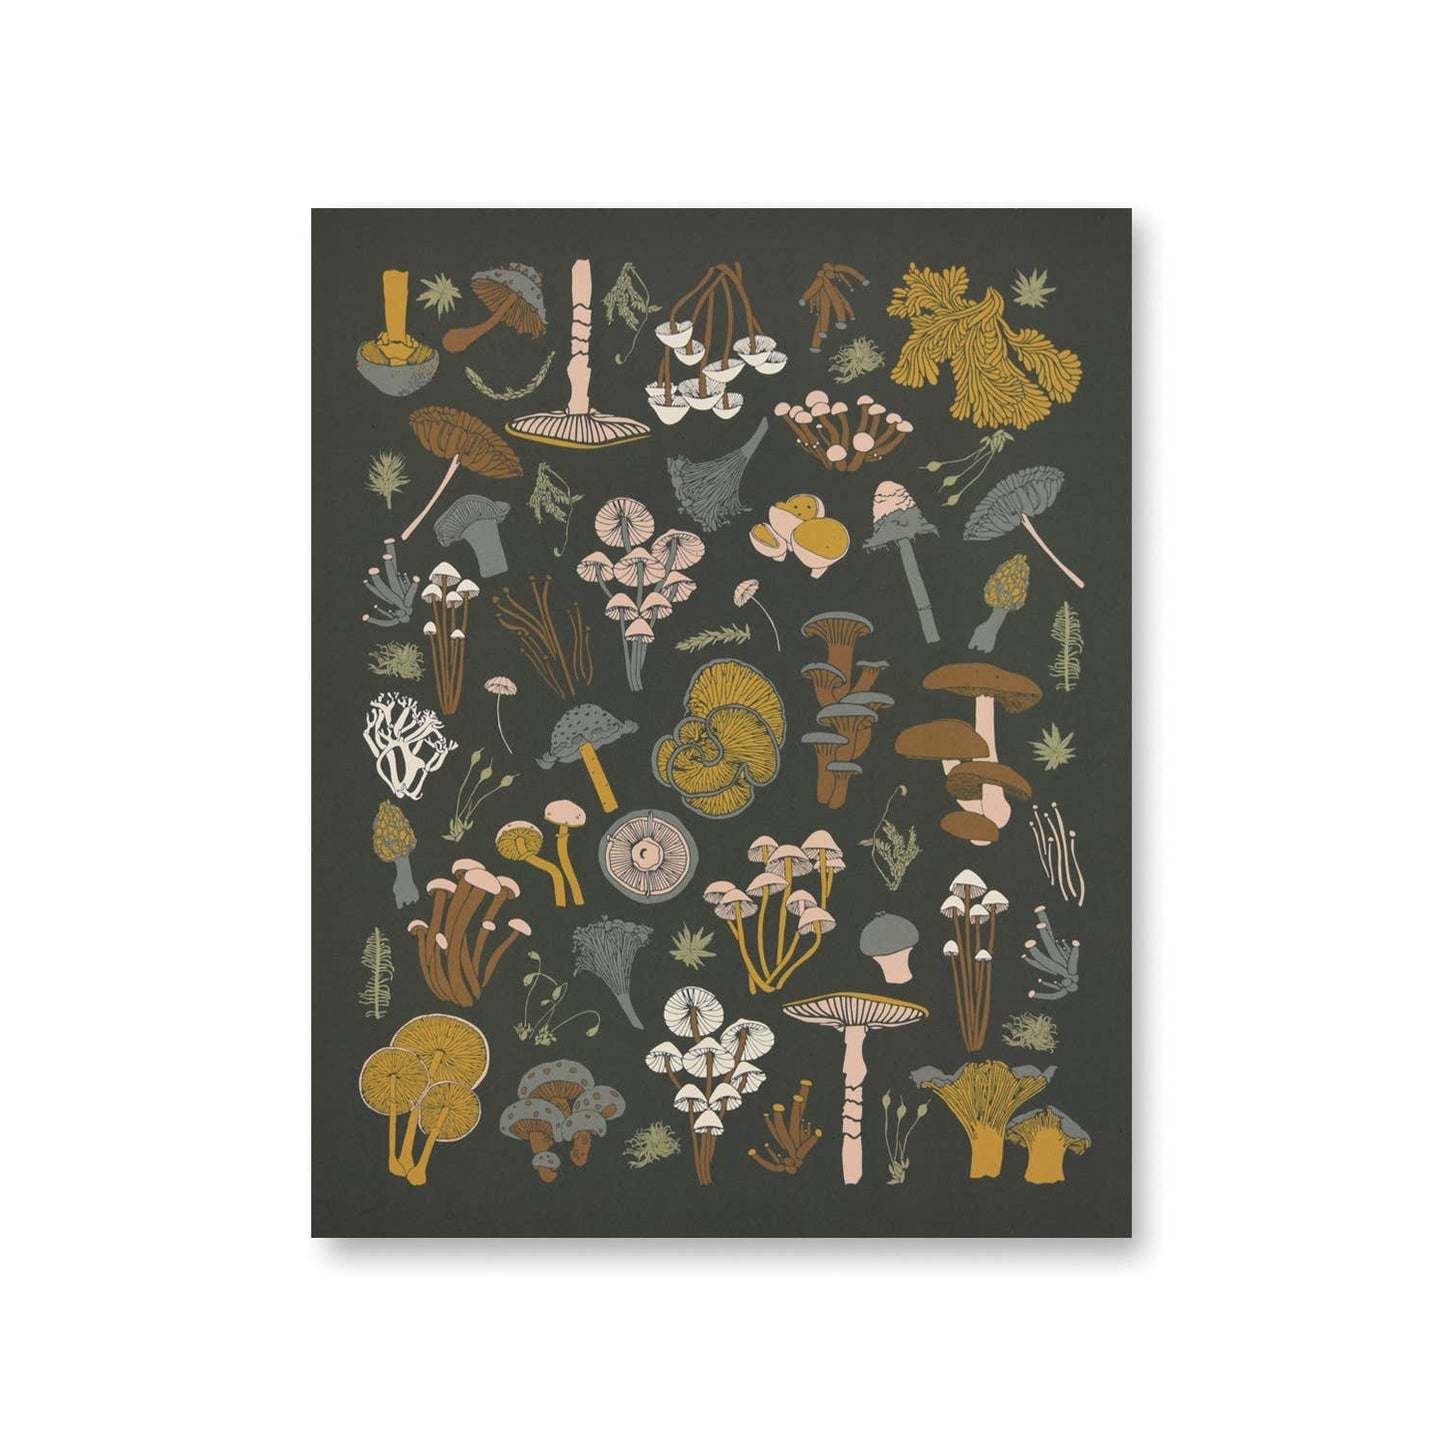 Mosses + Mushrooms 8x10 Print by June & December